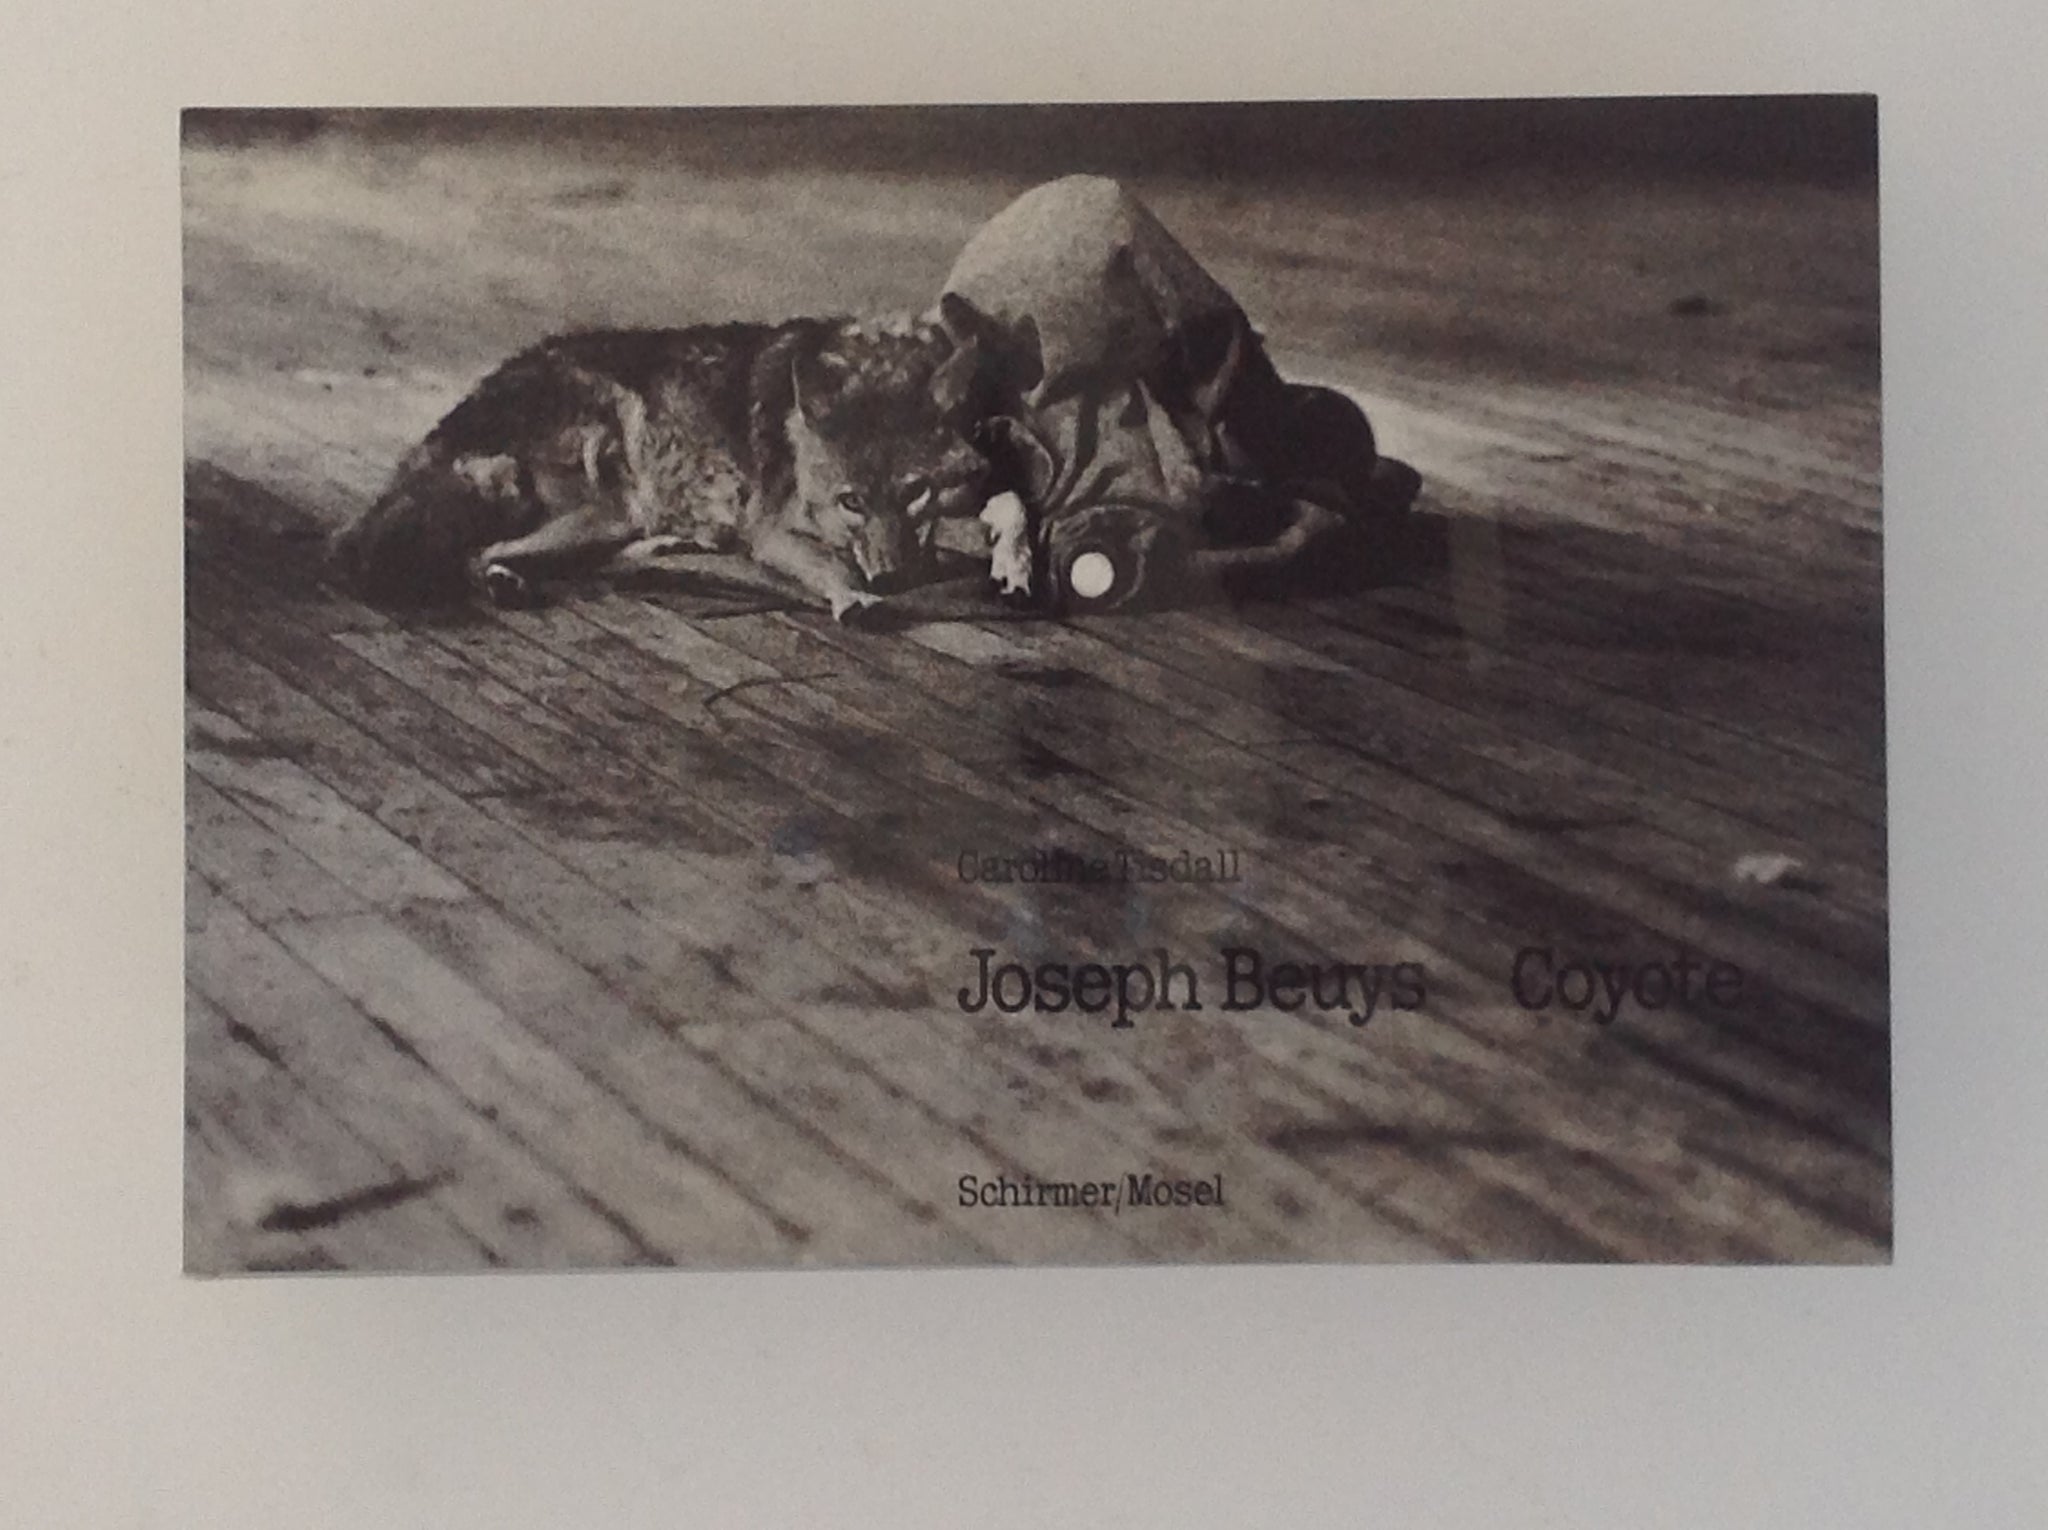 CAROLINE TISDALL. Joseph Beuys - Coyote - egidiusamsterdam.com